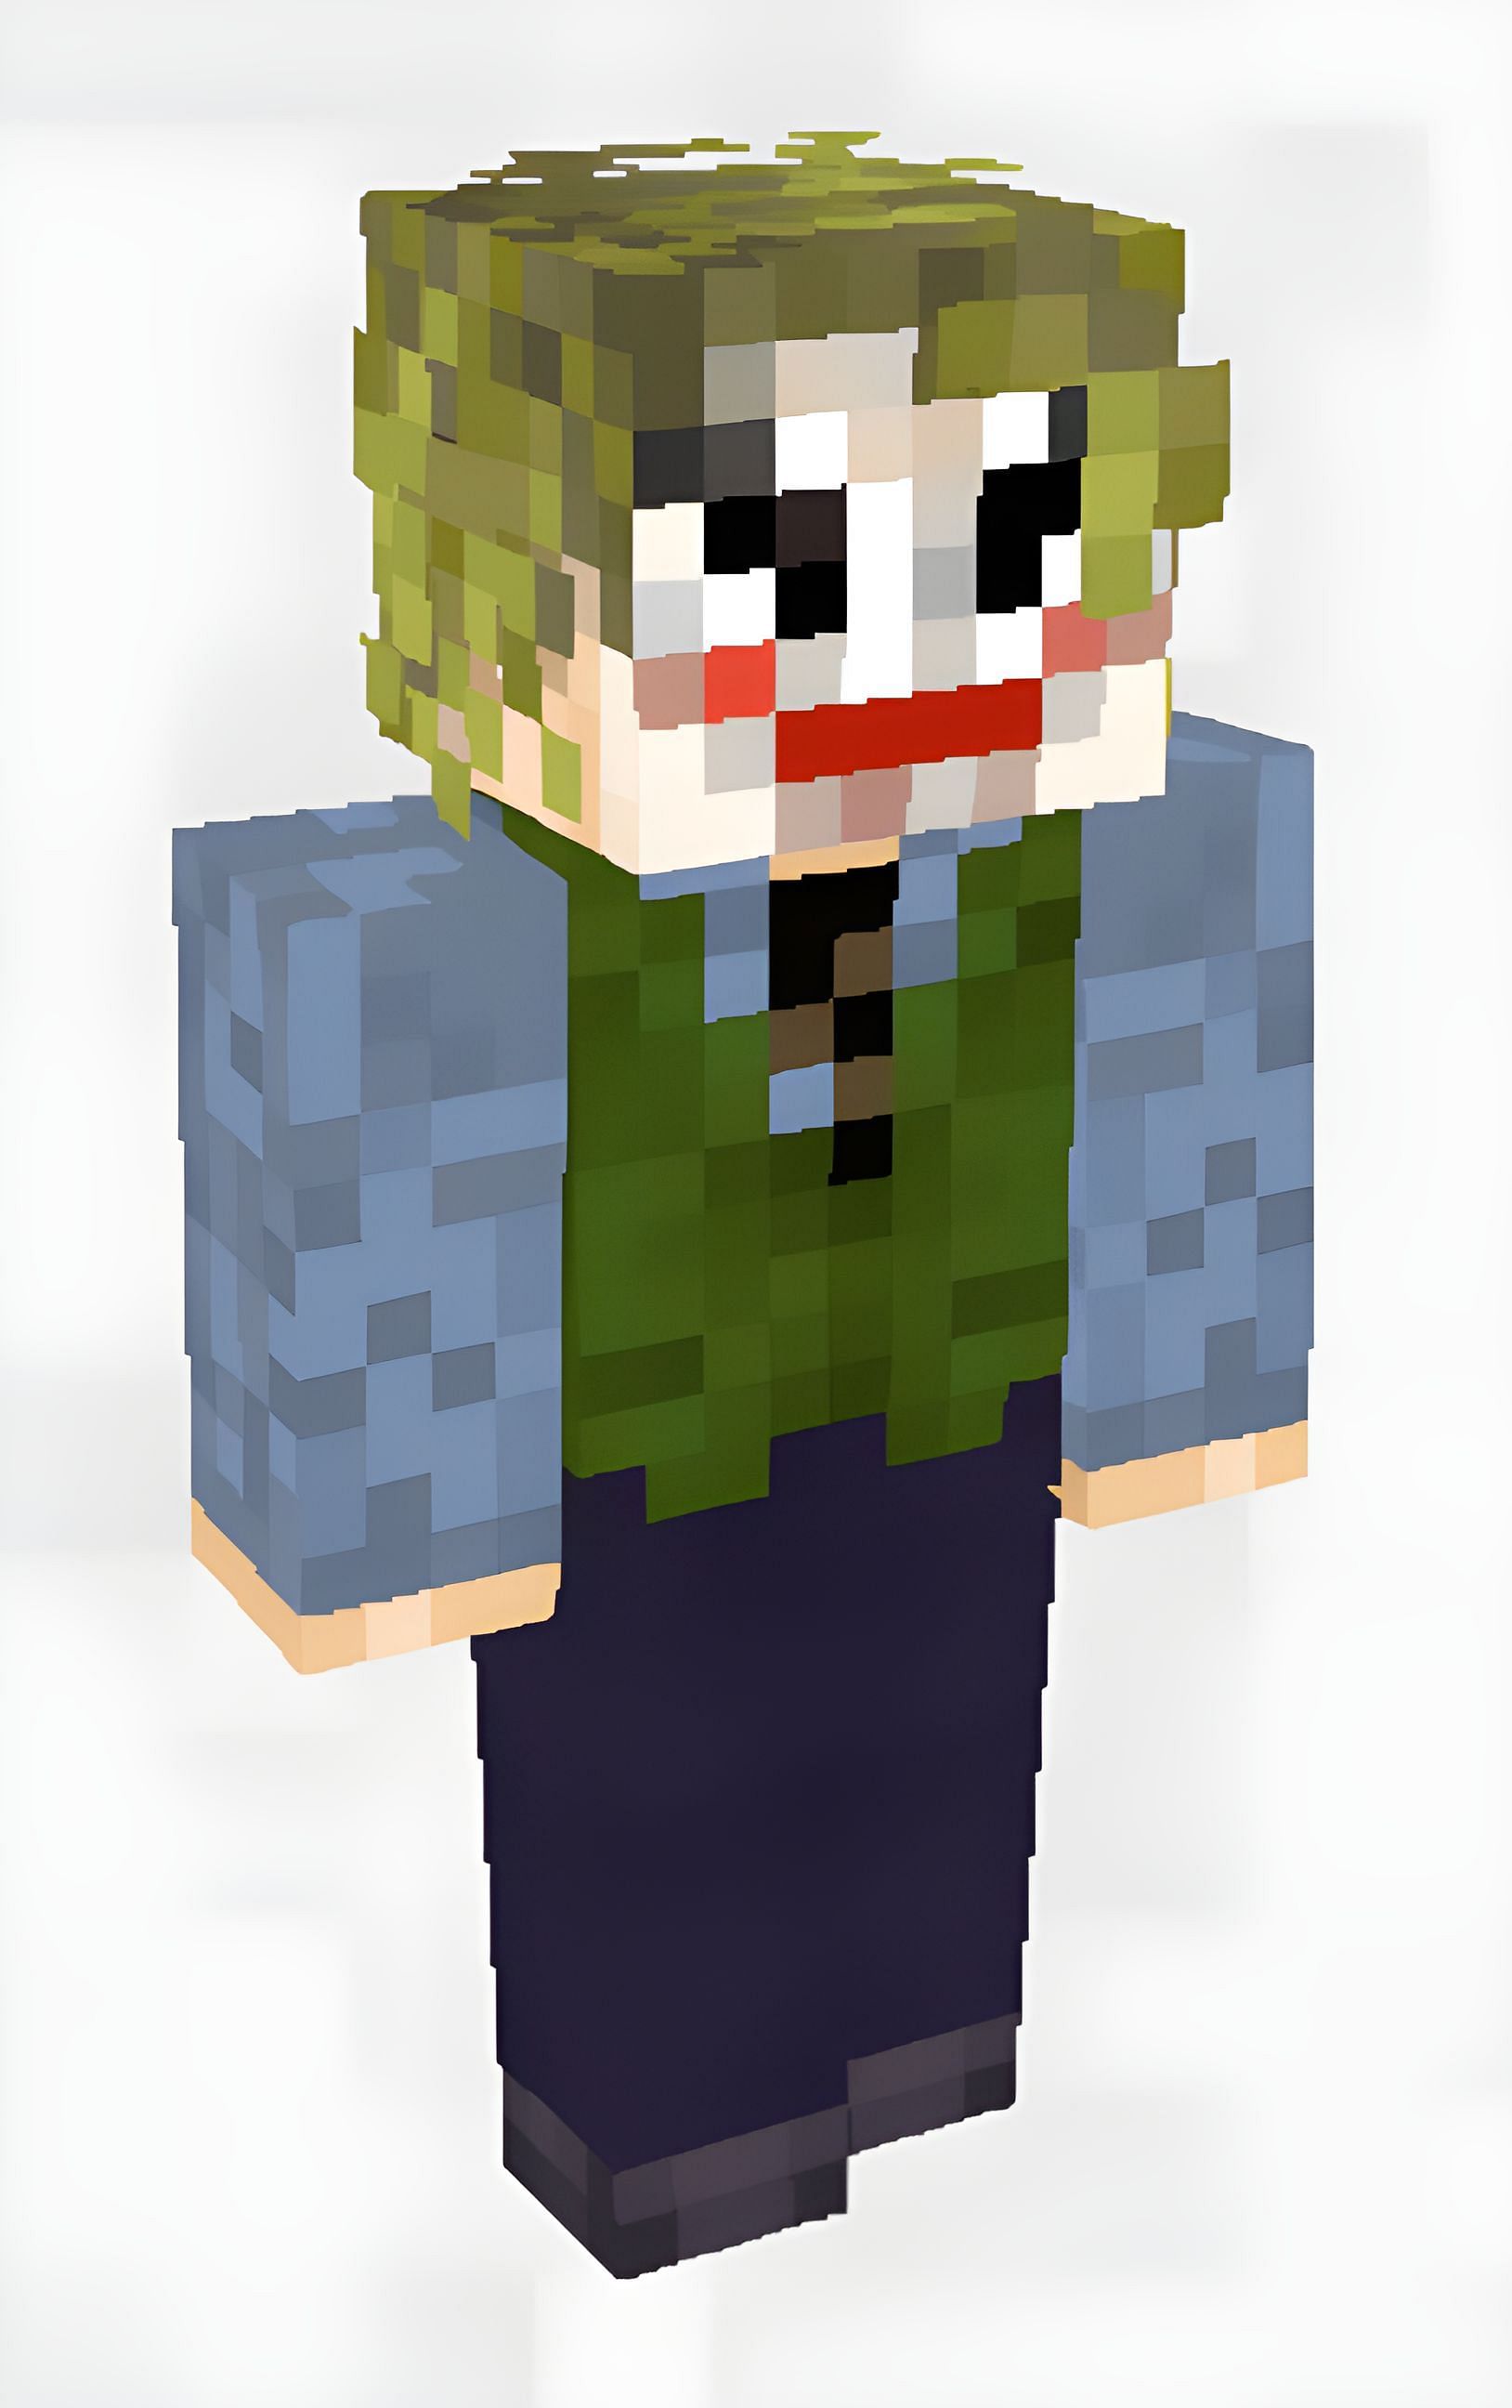 The Joker (Image via SkinsMC)